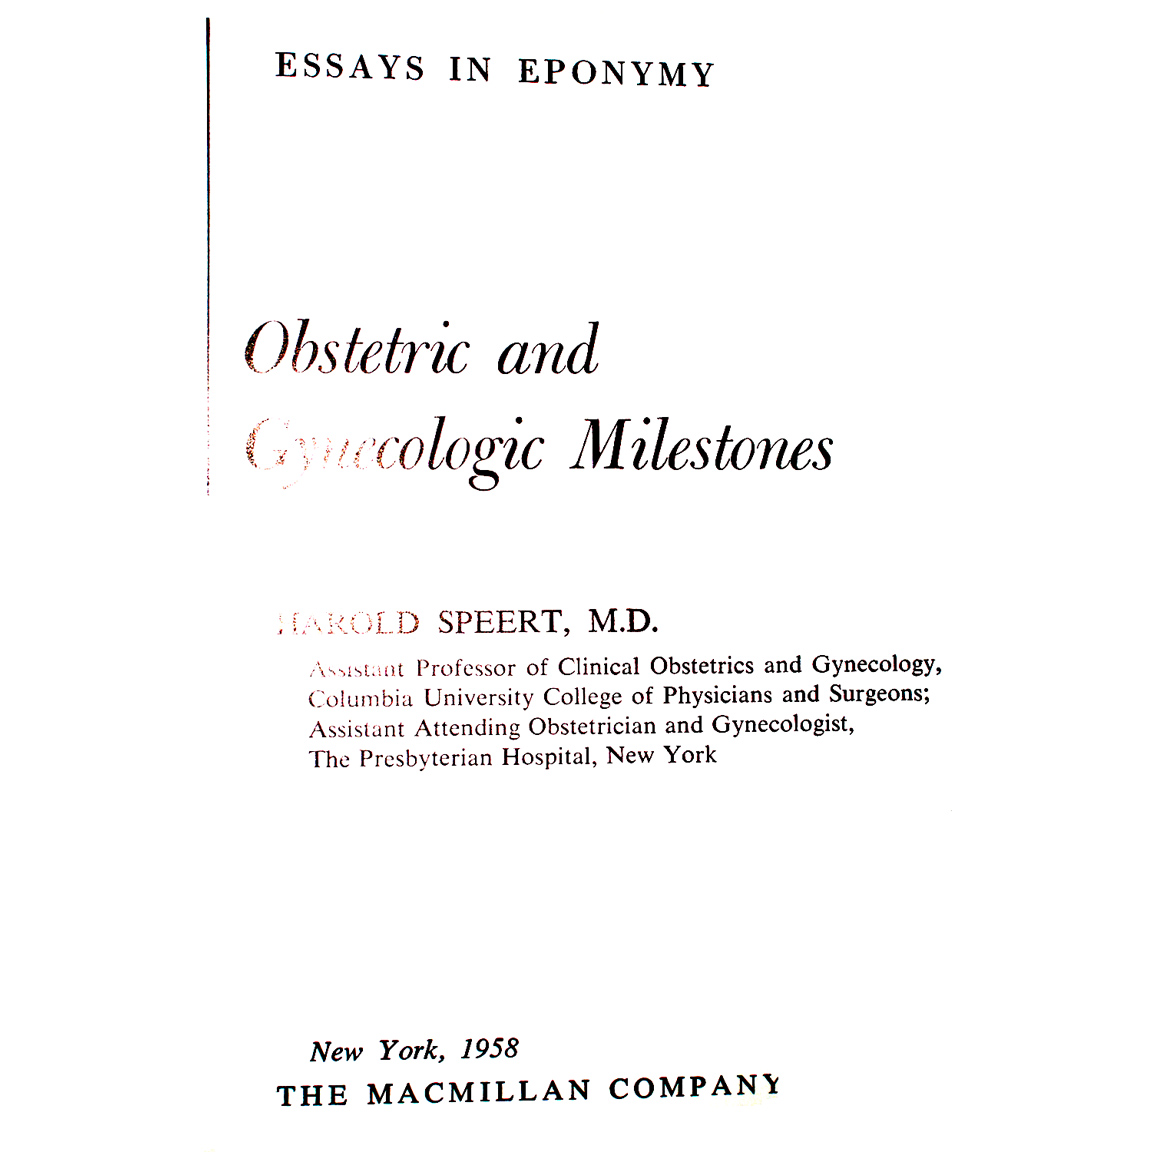 1958-SPEERT-Obstetric Milestones-title page